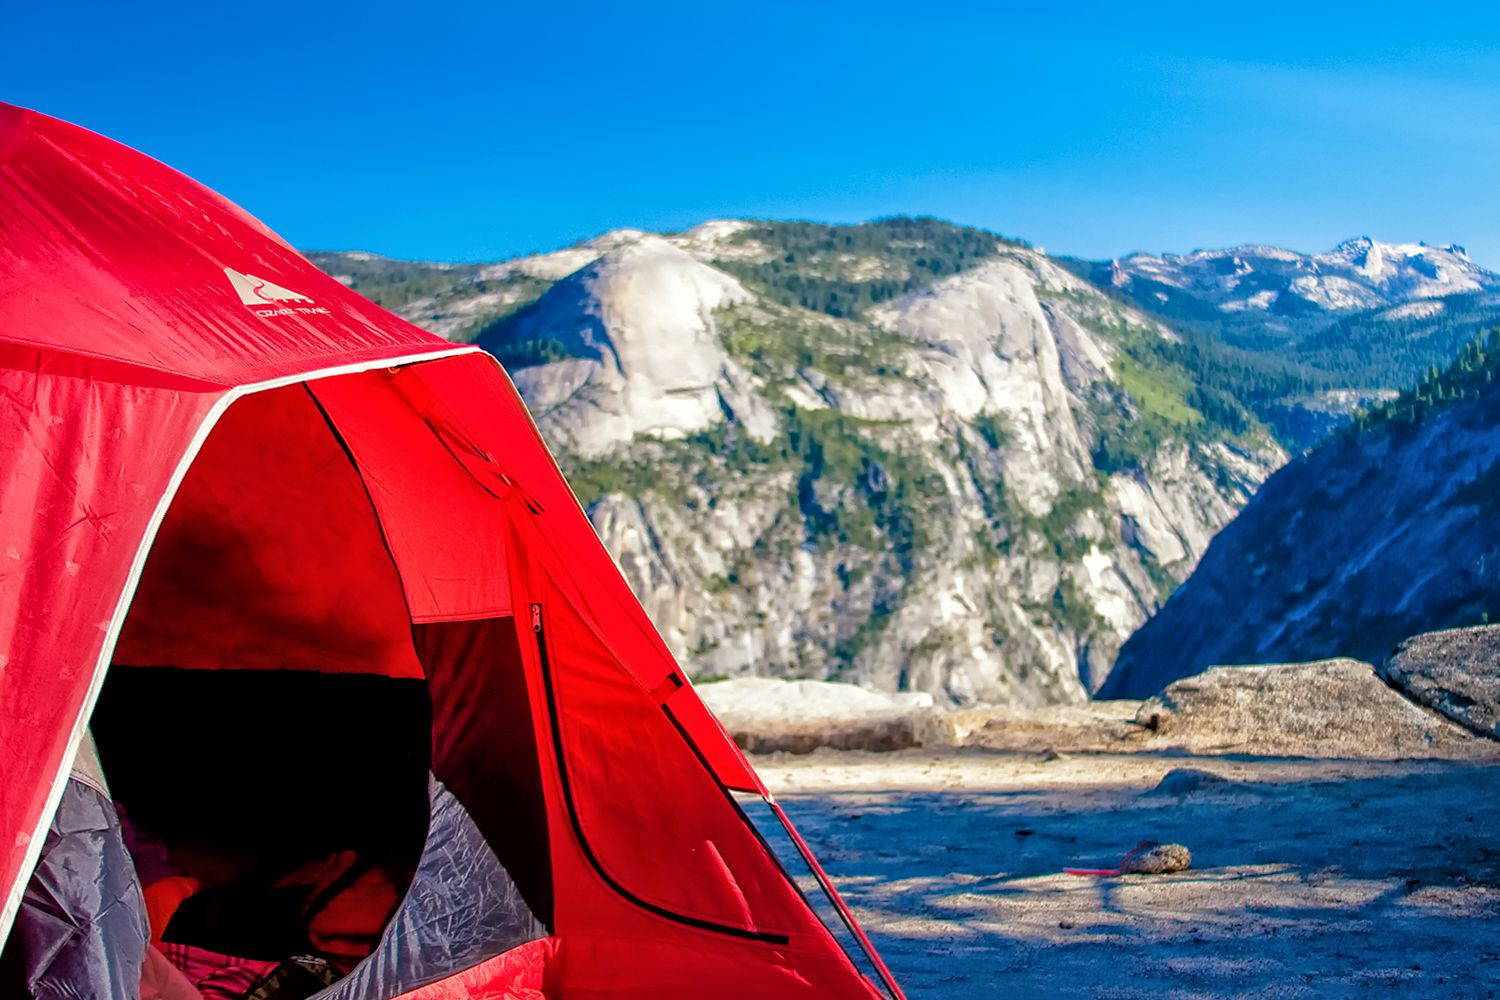 Top camping. Йосемити кемпинг. FUNLUCE Yosemite Camper. Go Camping.